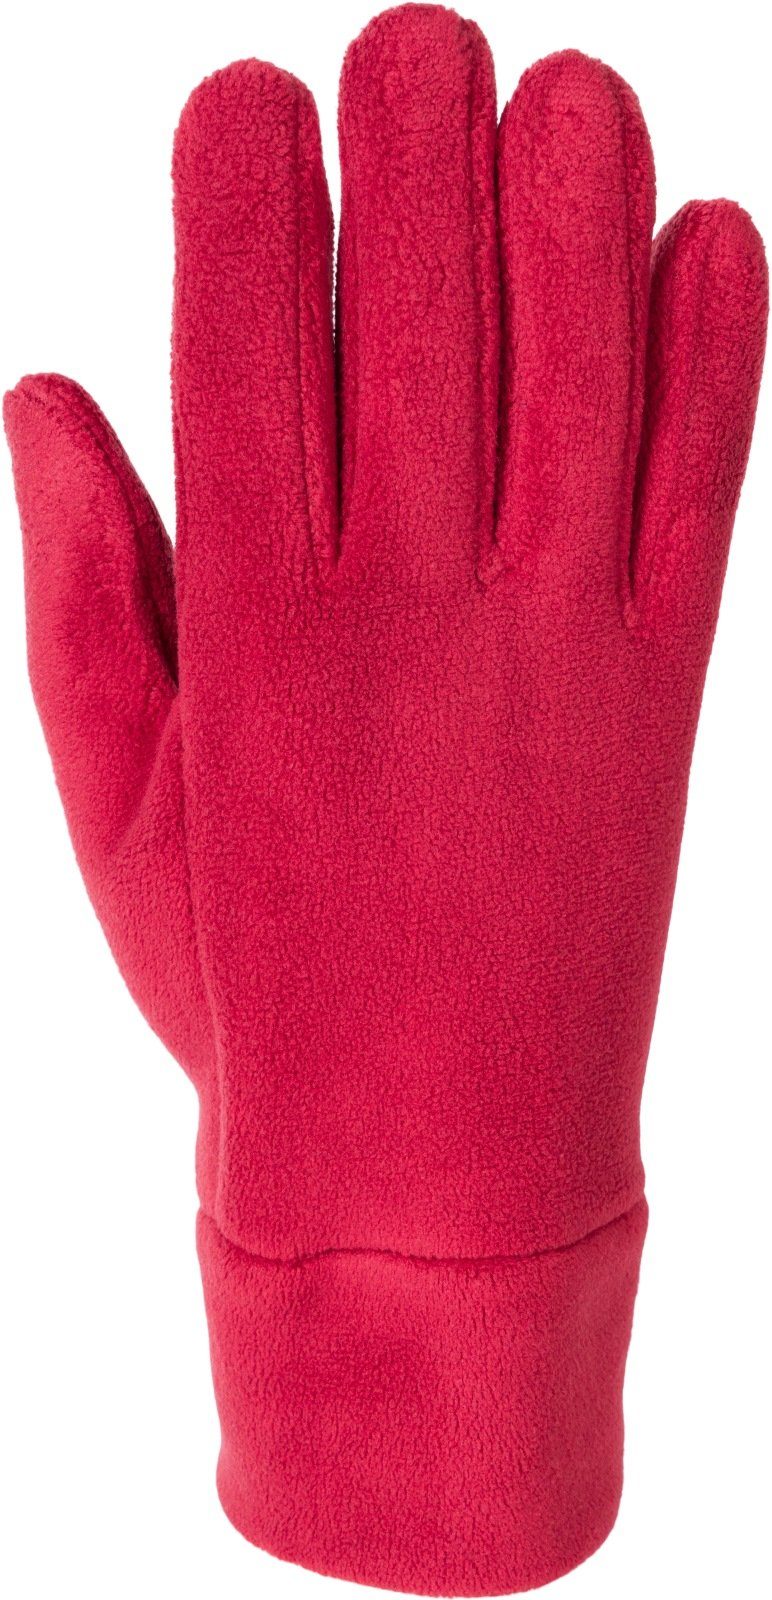 styleBREAKER Fleece Einfarbige Touchscreen Handschuhe Fleecehandschuhe Weinrot